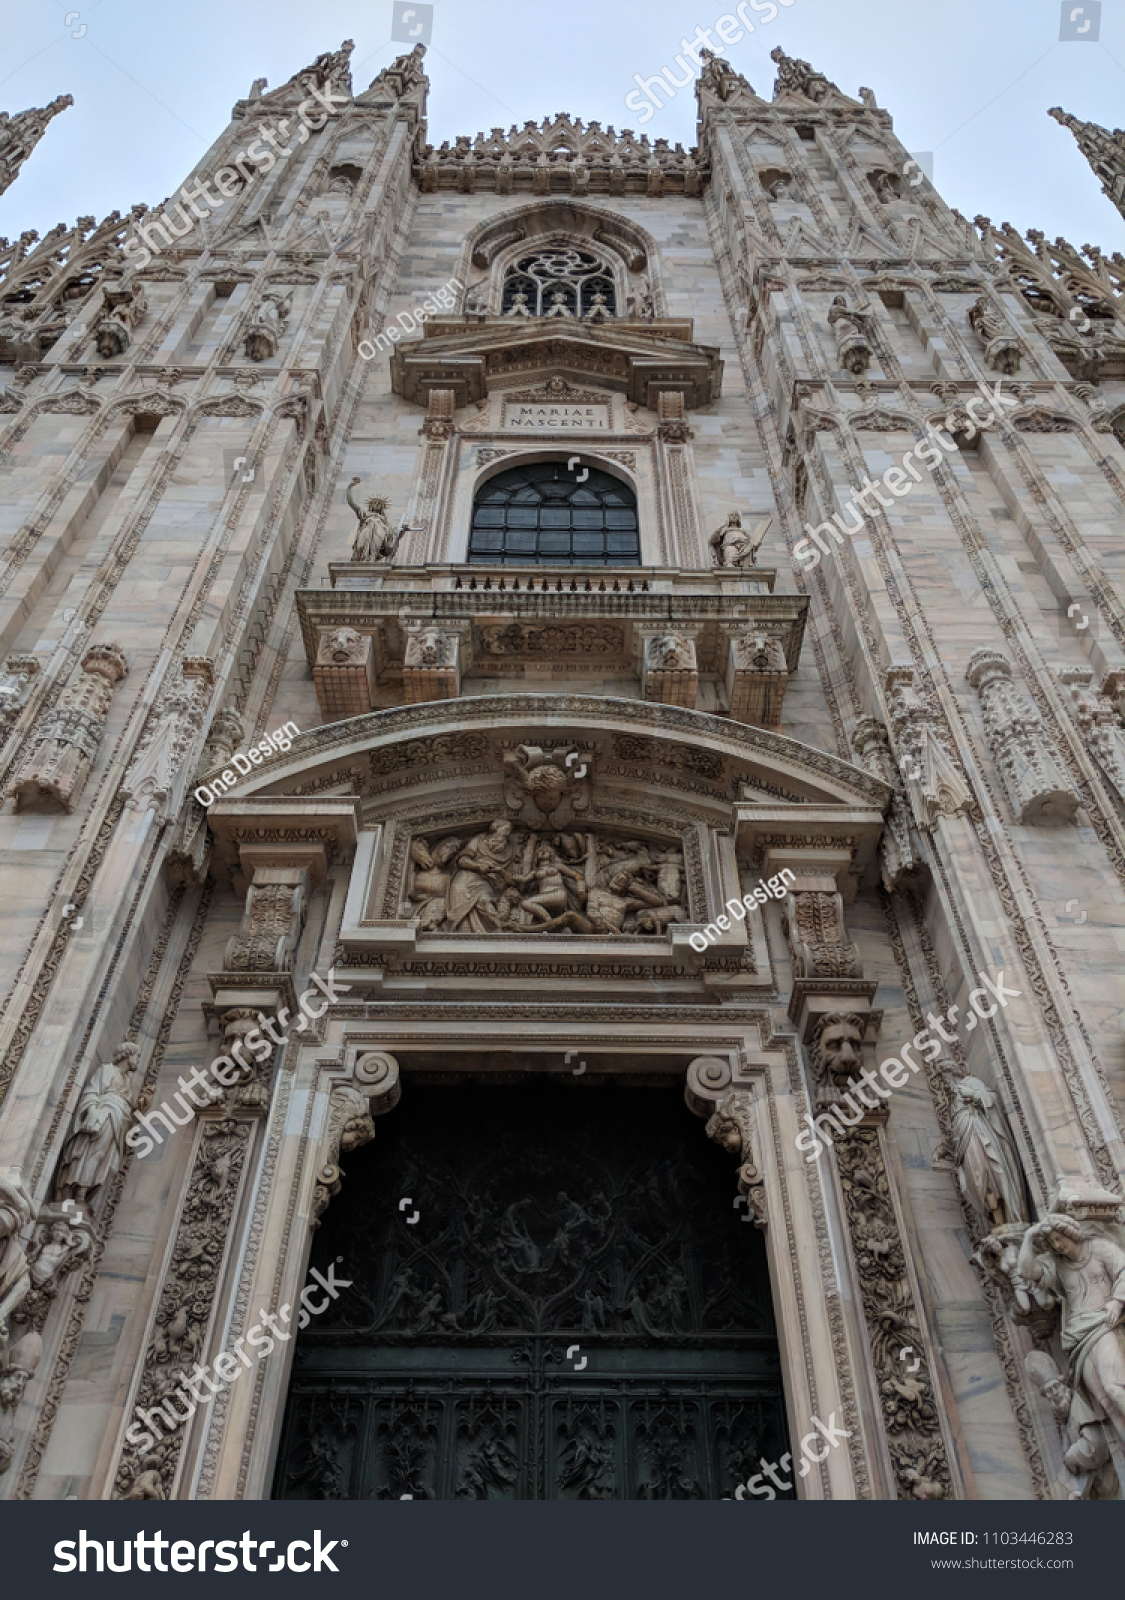 Doumo di Milano, the Cathedral Church of Milan, Lombardo Italy. Europe. Popular tourist attraction. #1103446283